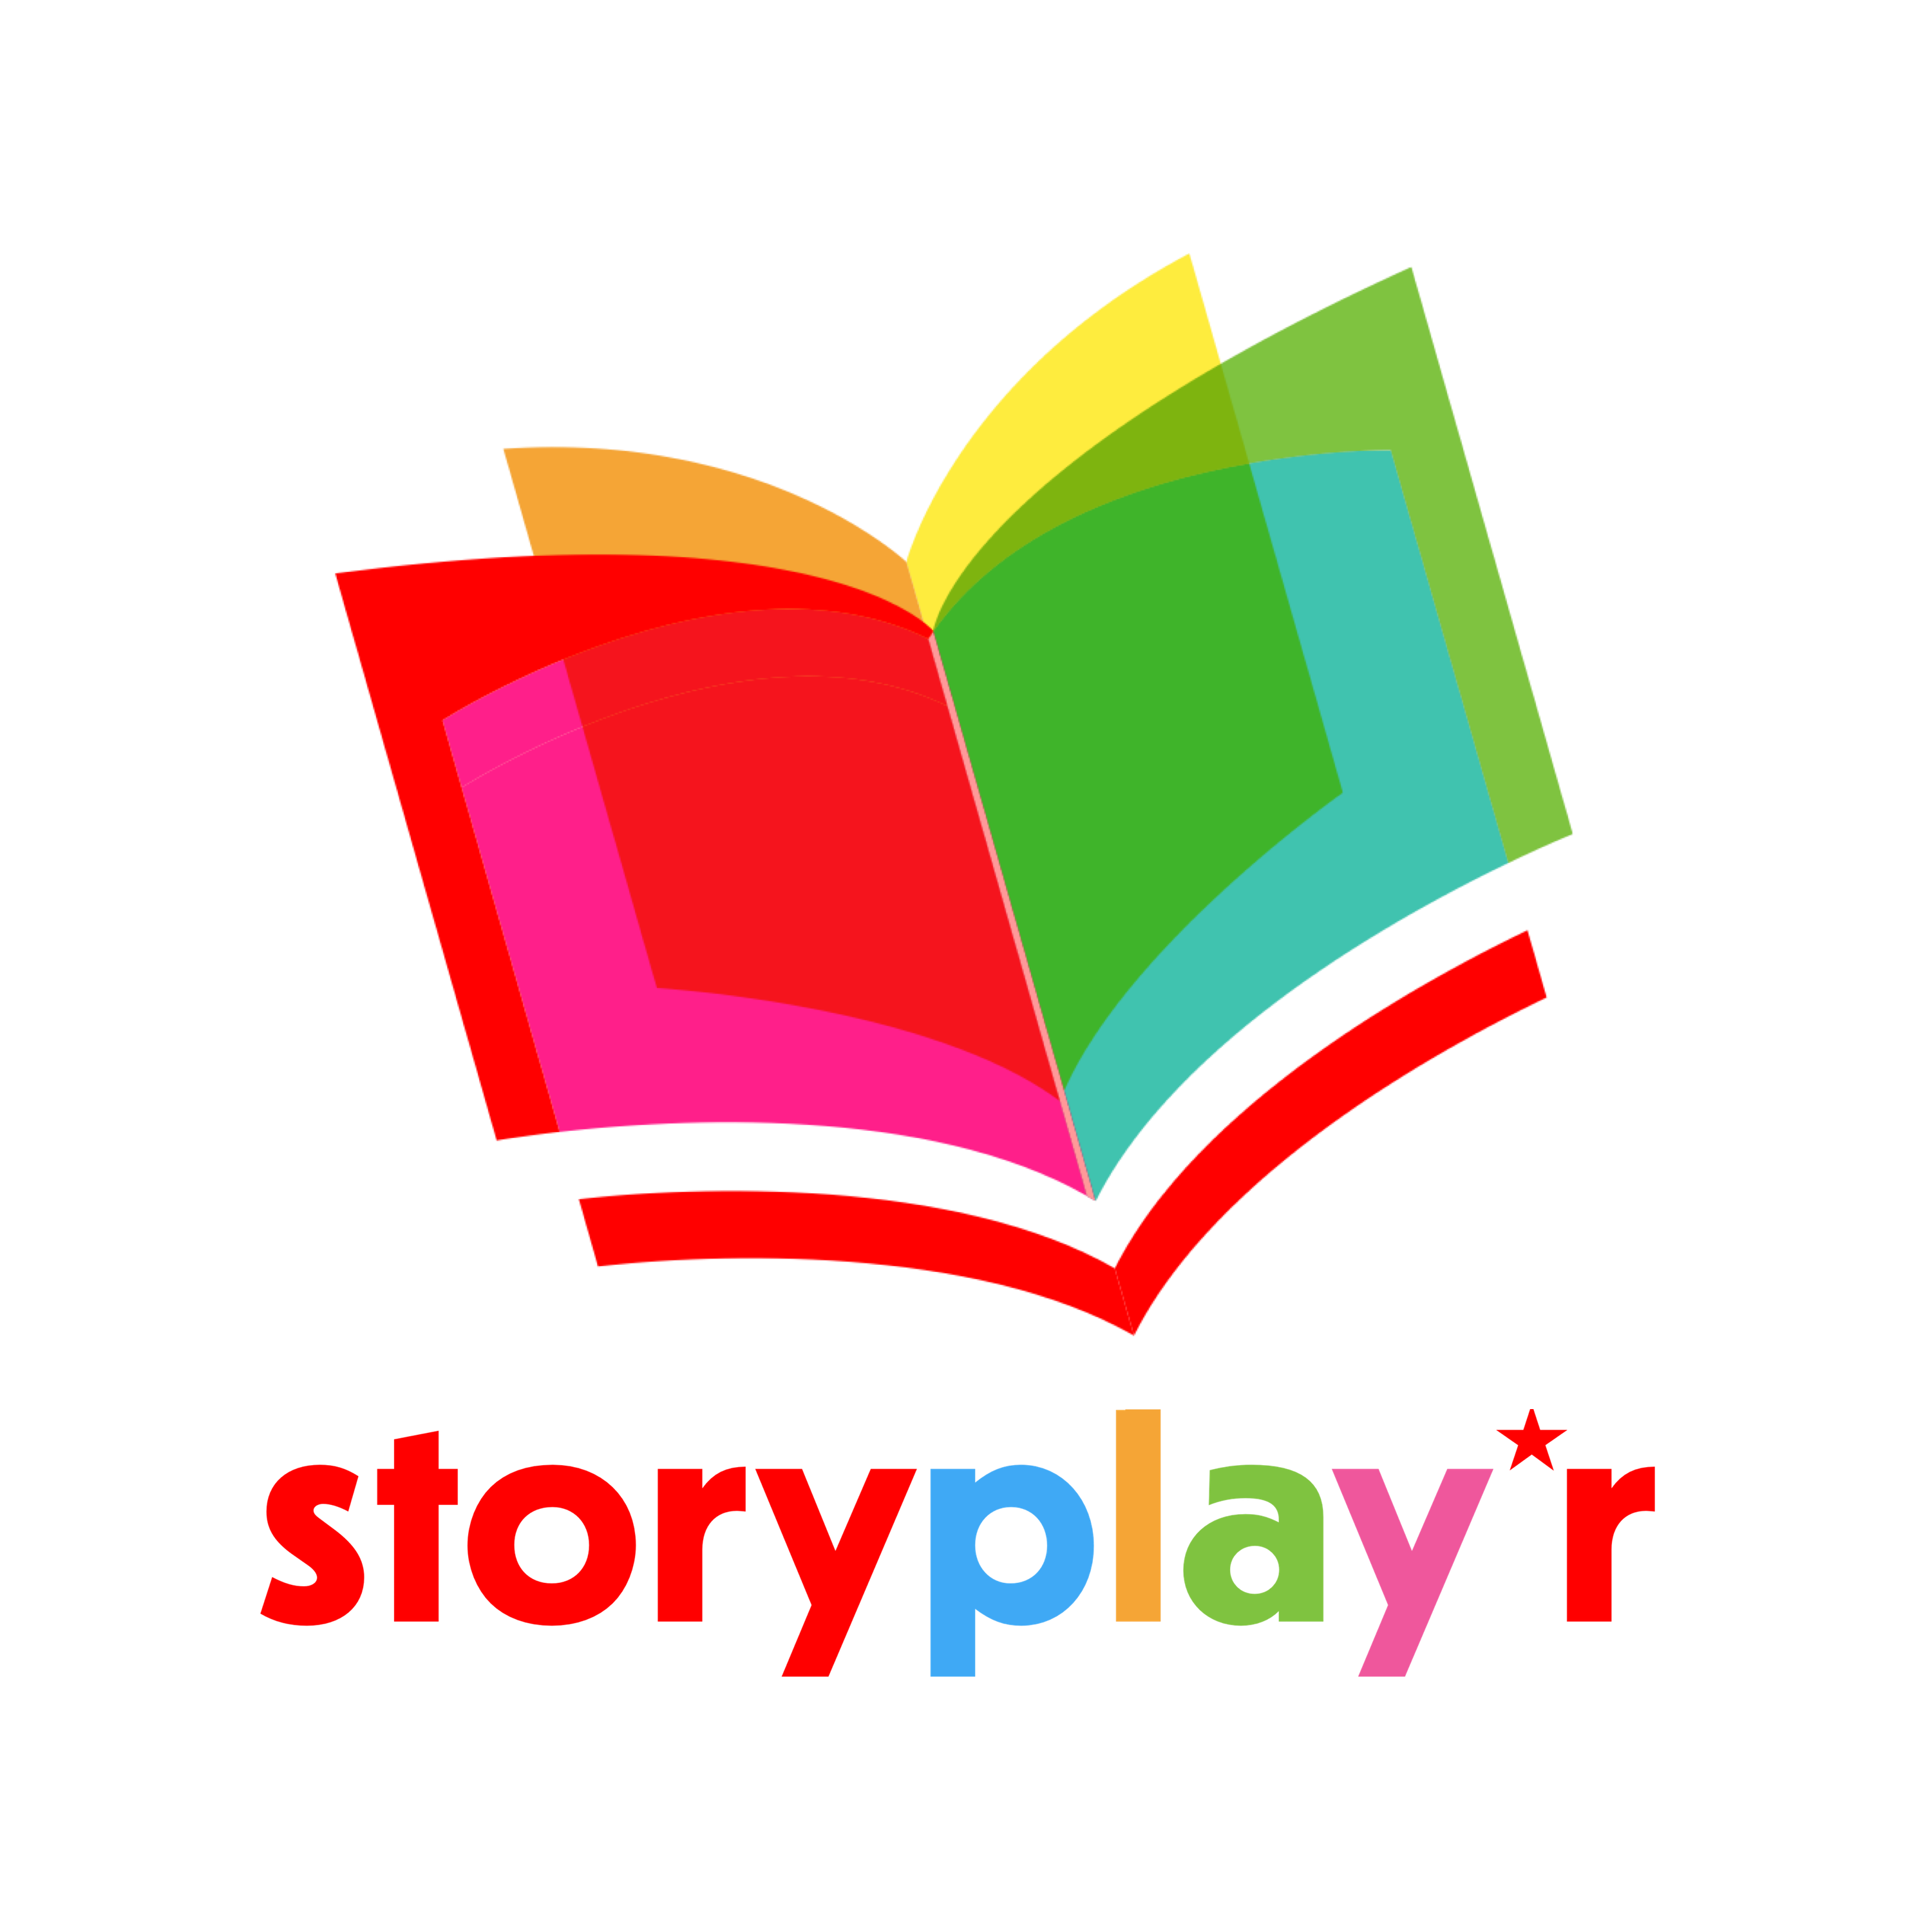 StoryplayrLogoLivre